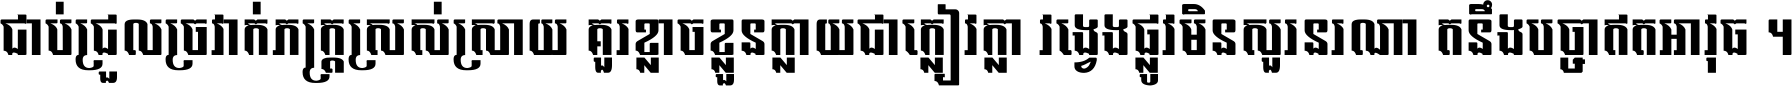 Kh Baphnom 017 EmEng